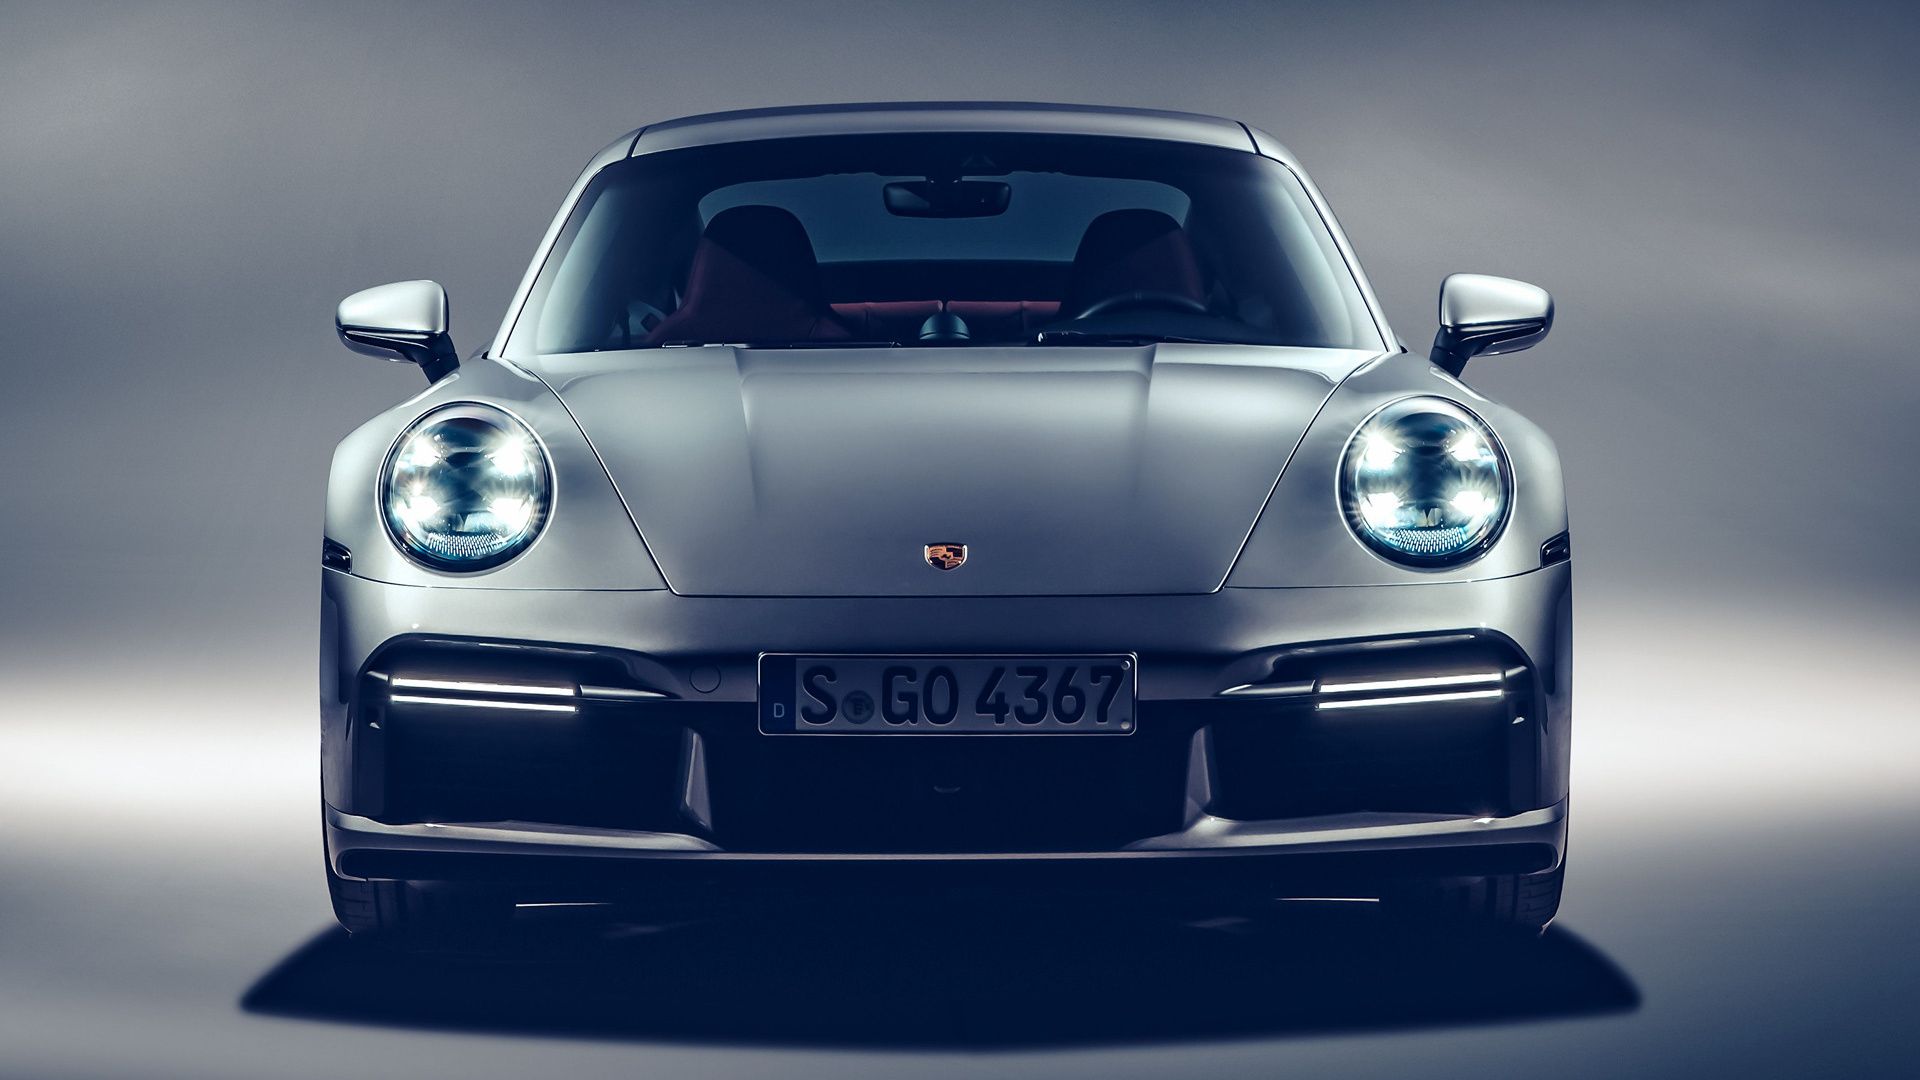 Porsche 911 Turbo S and HD Image